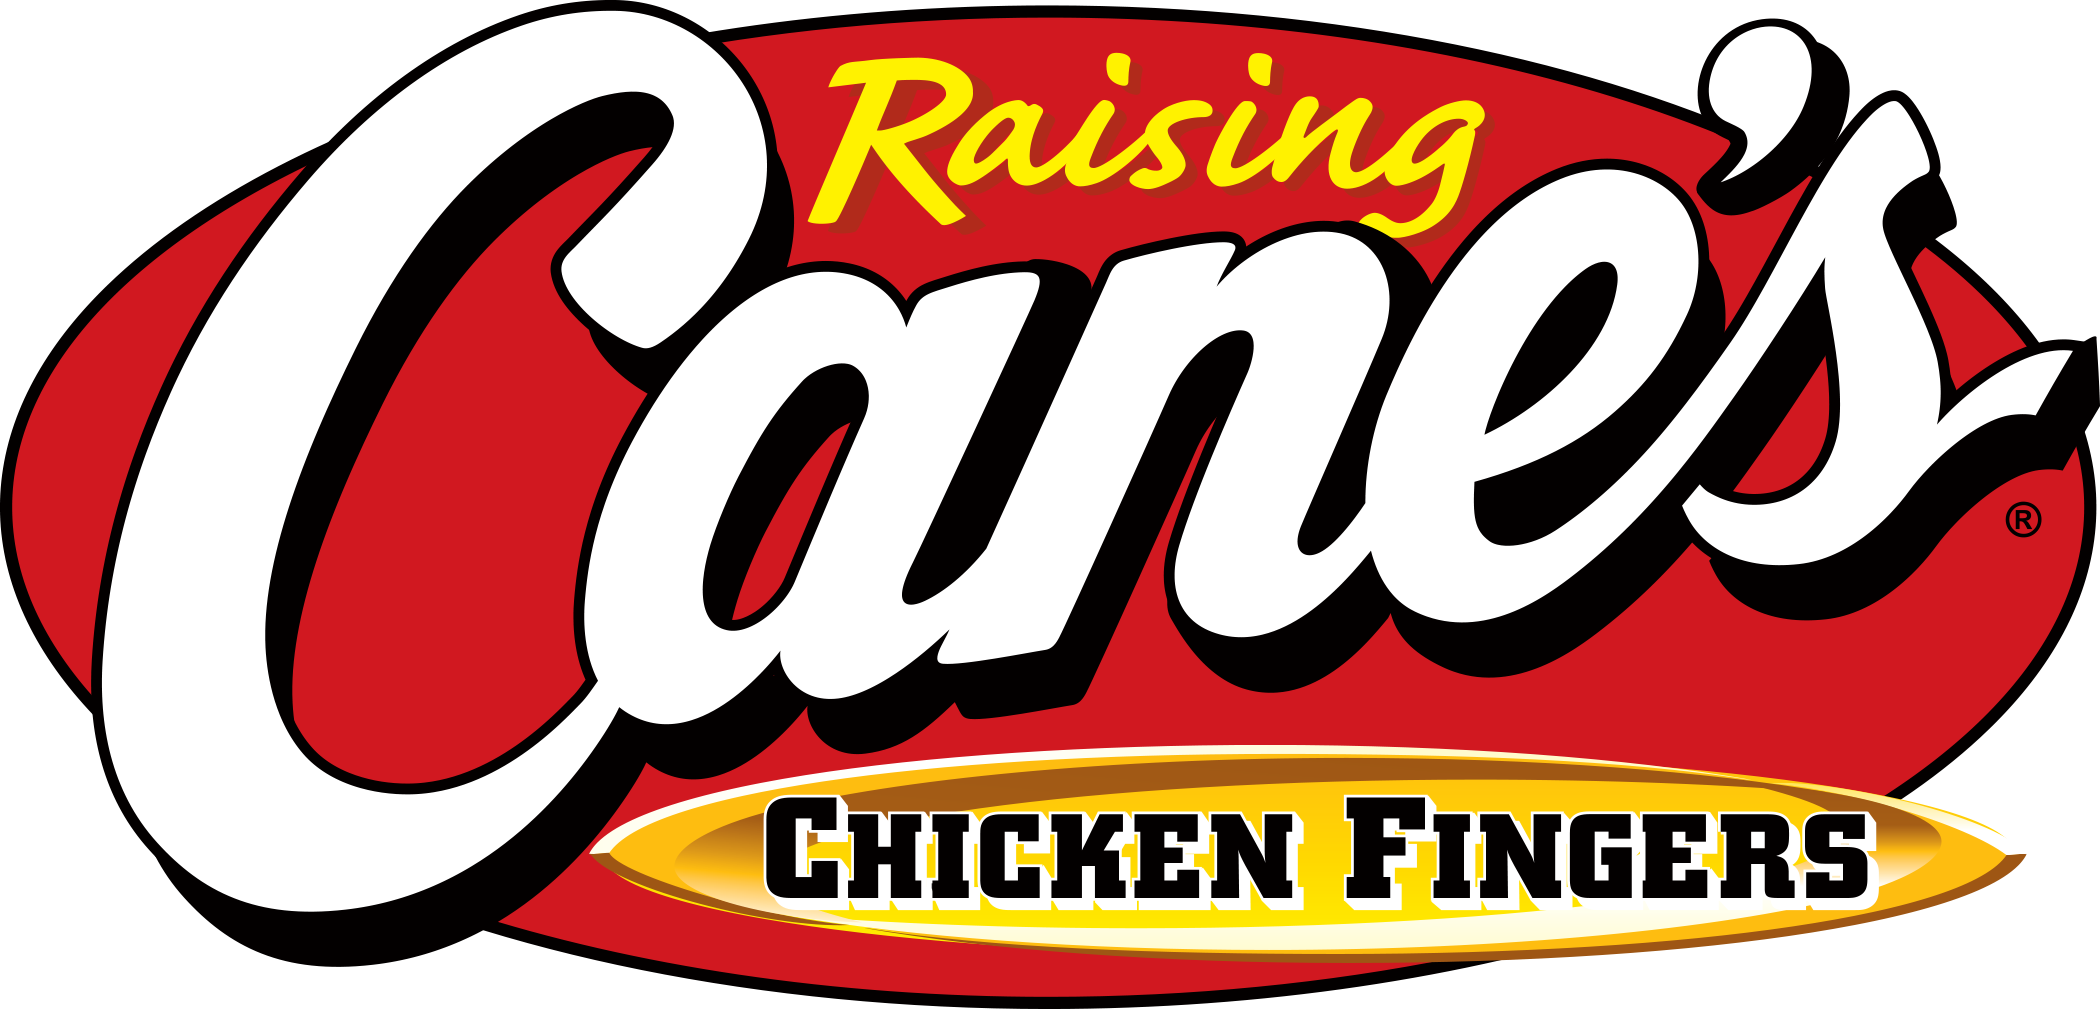 Raising Canes logo.png